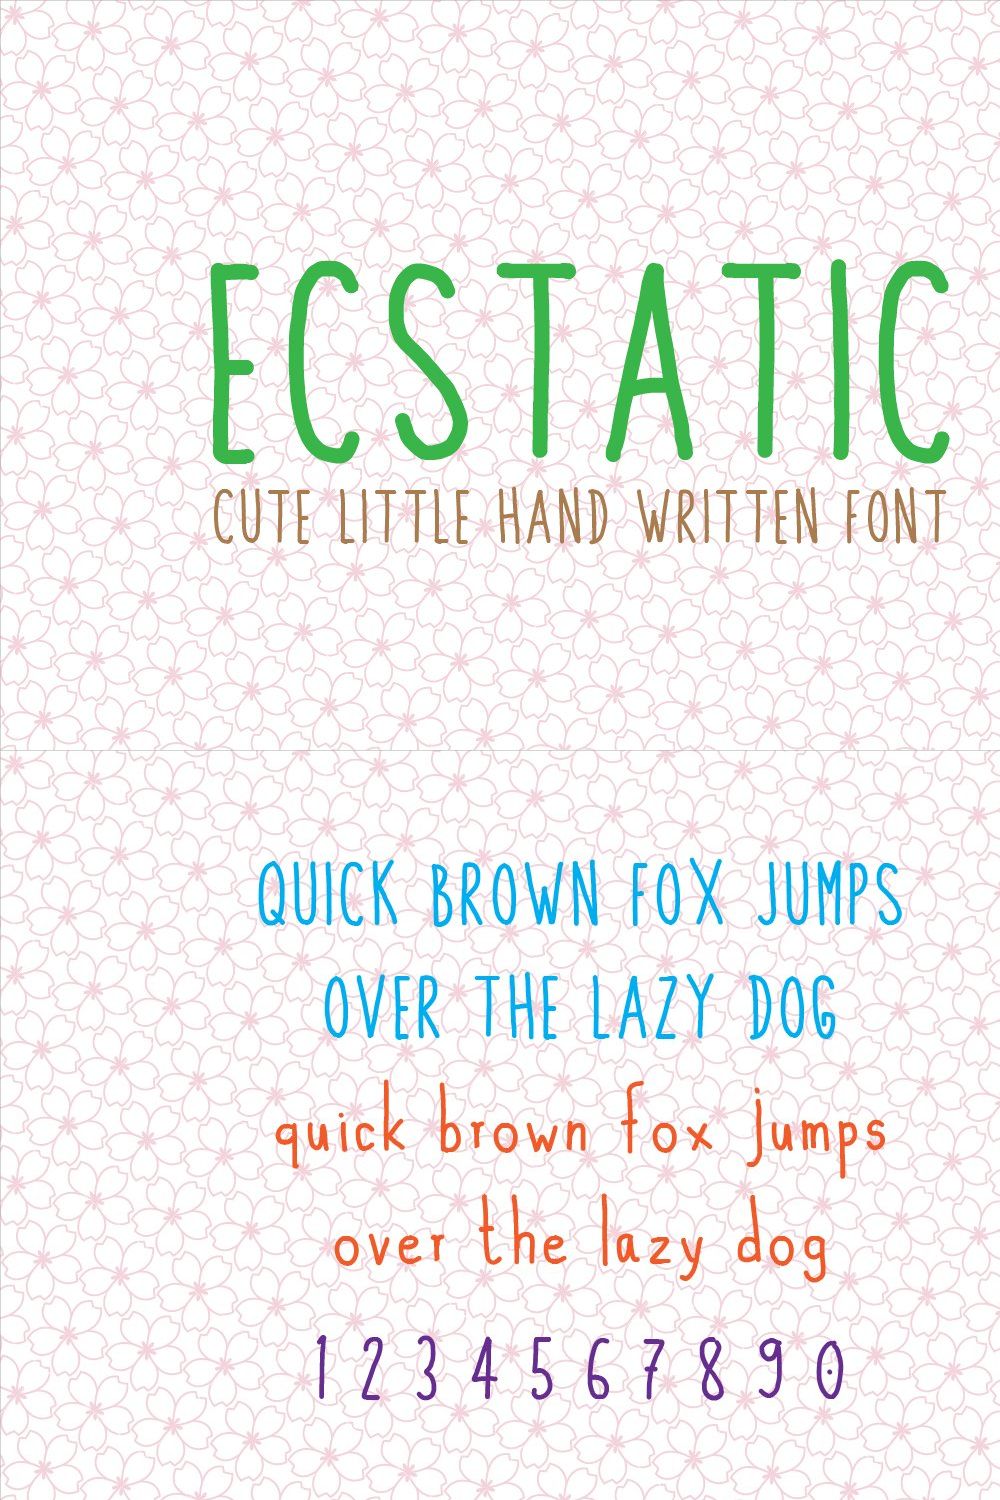 Ecstatic Typeface pinterest preview image.